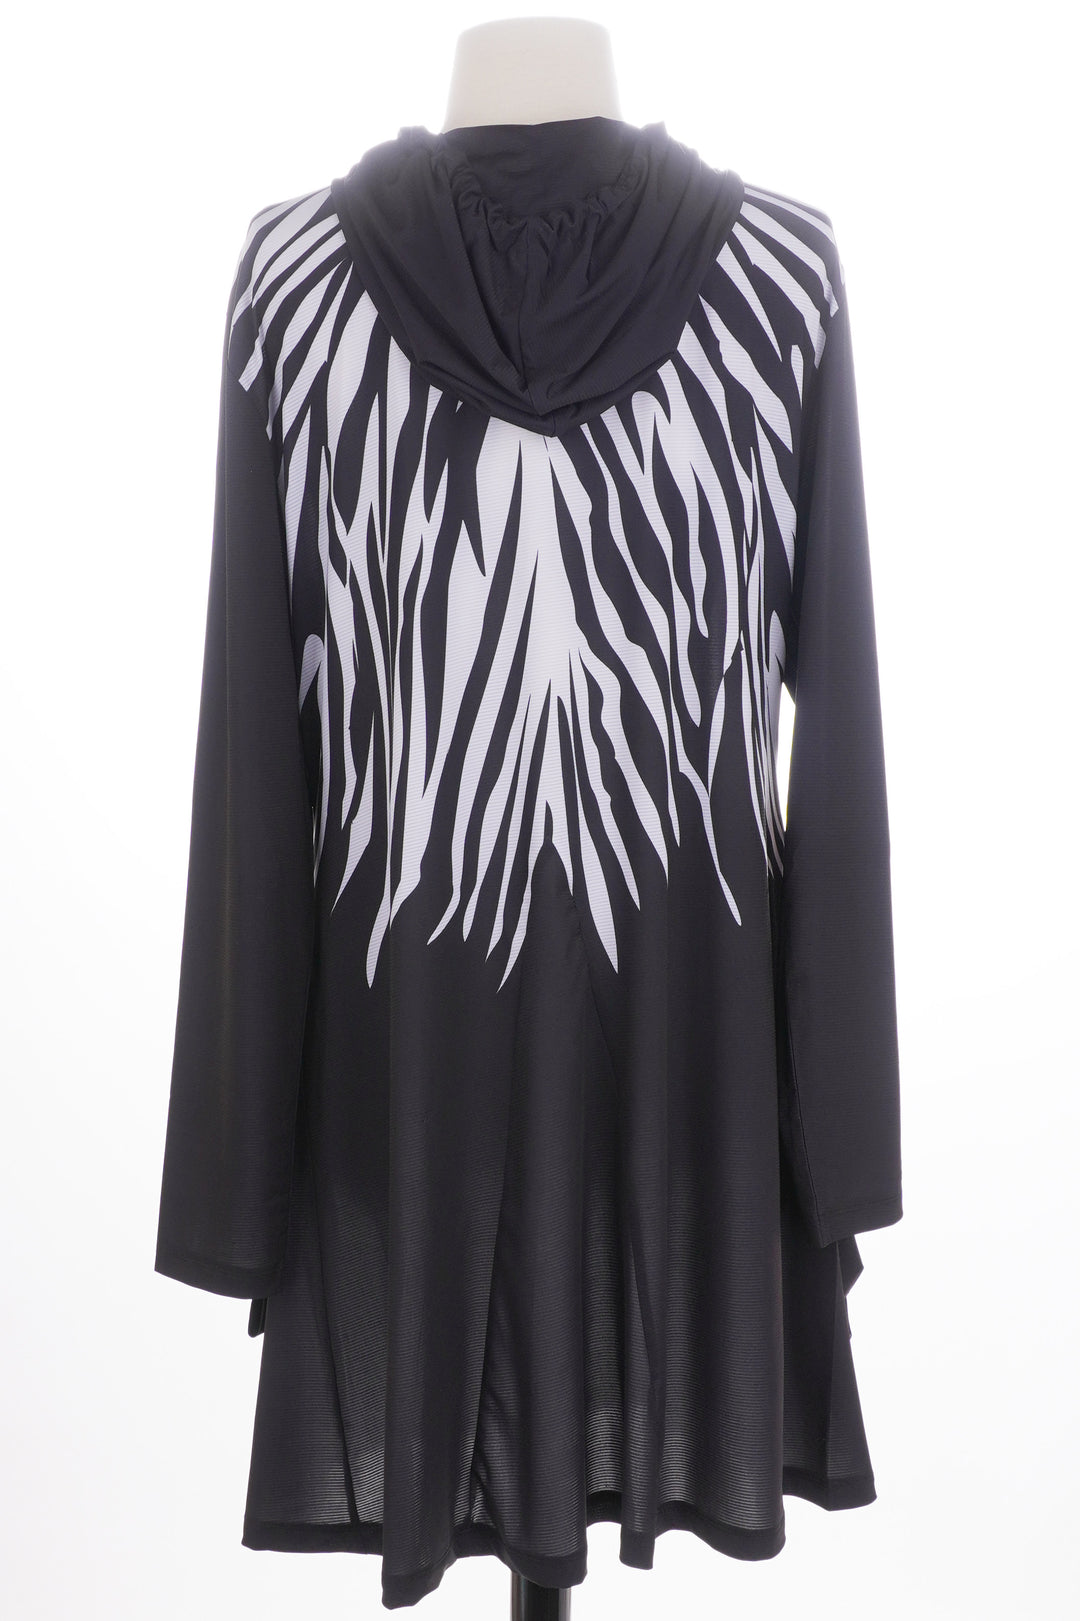 Sunsense By Jamie Sadock Zebra Print Hooded Long Sleeve Dress  - Size Large - Skorzie